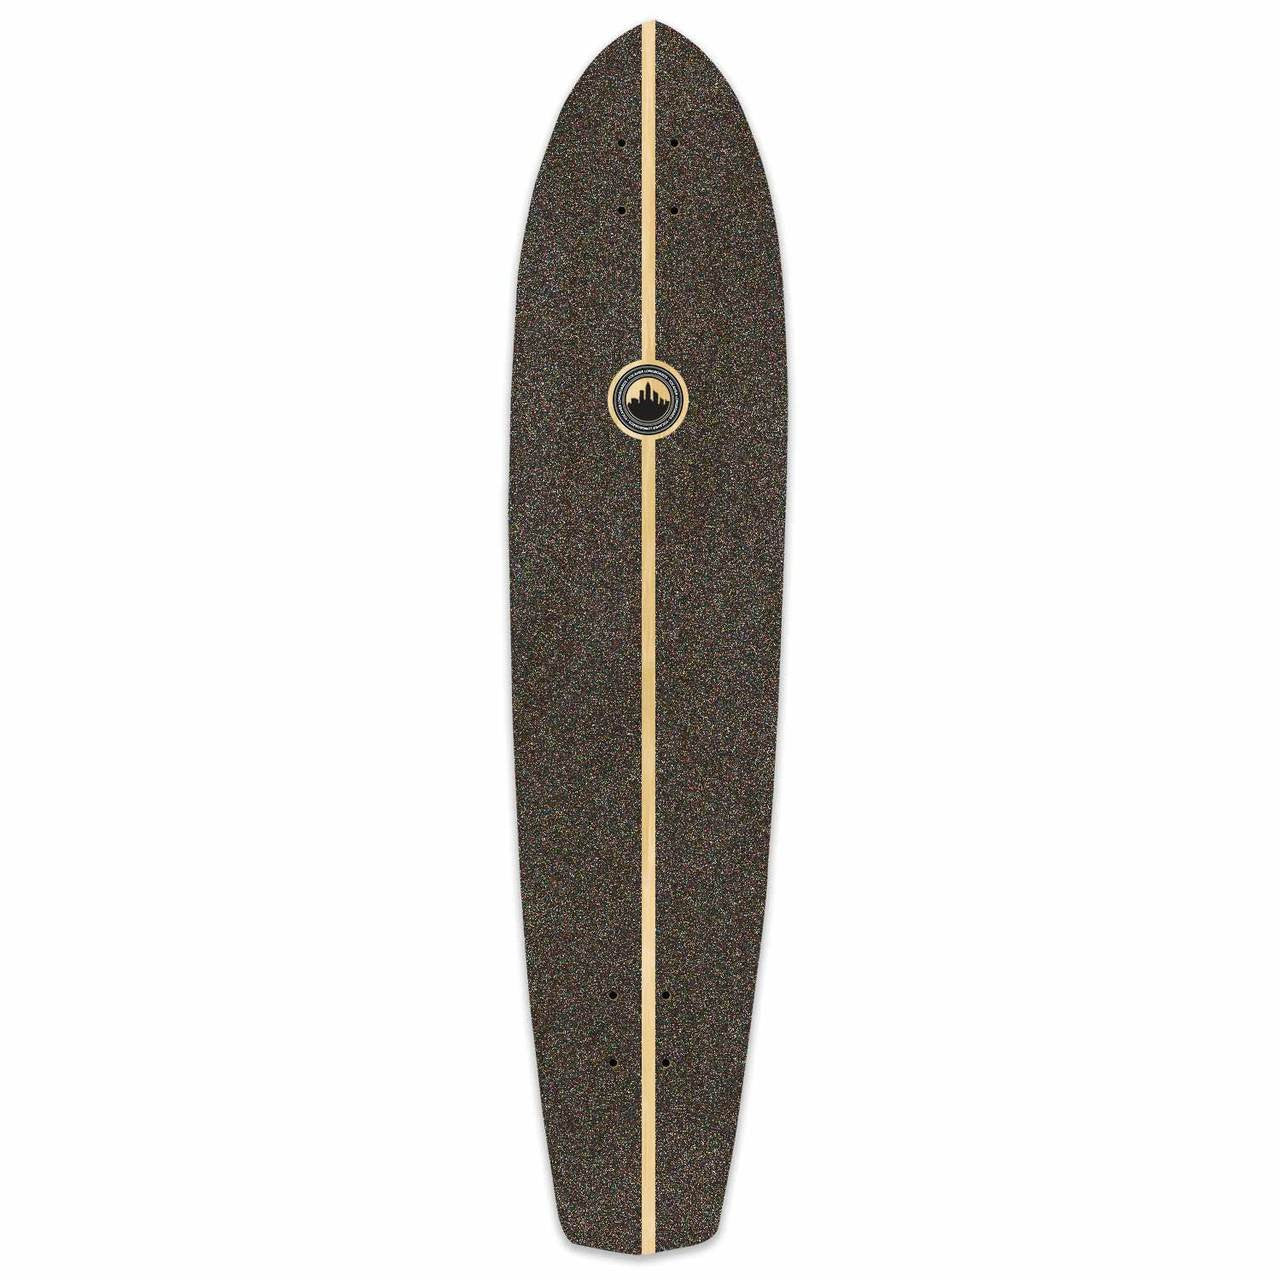 Yocaher Slimkick Longboard Deck - Surf's up